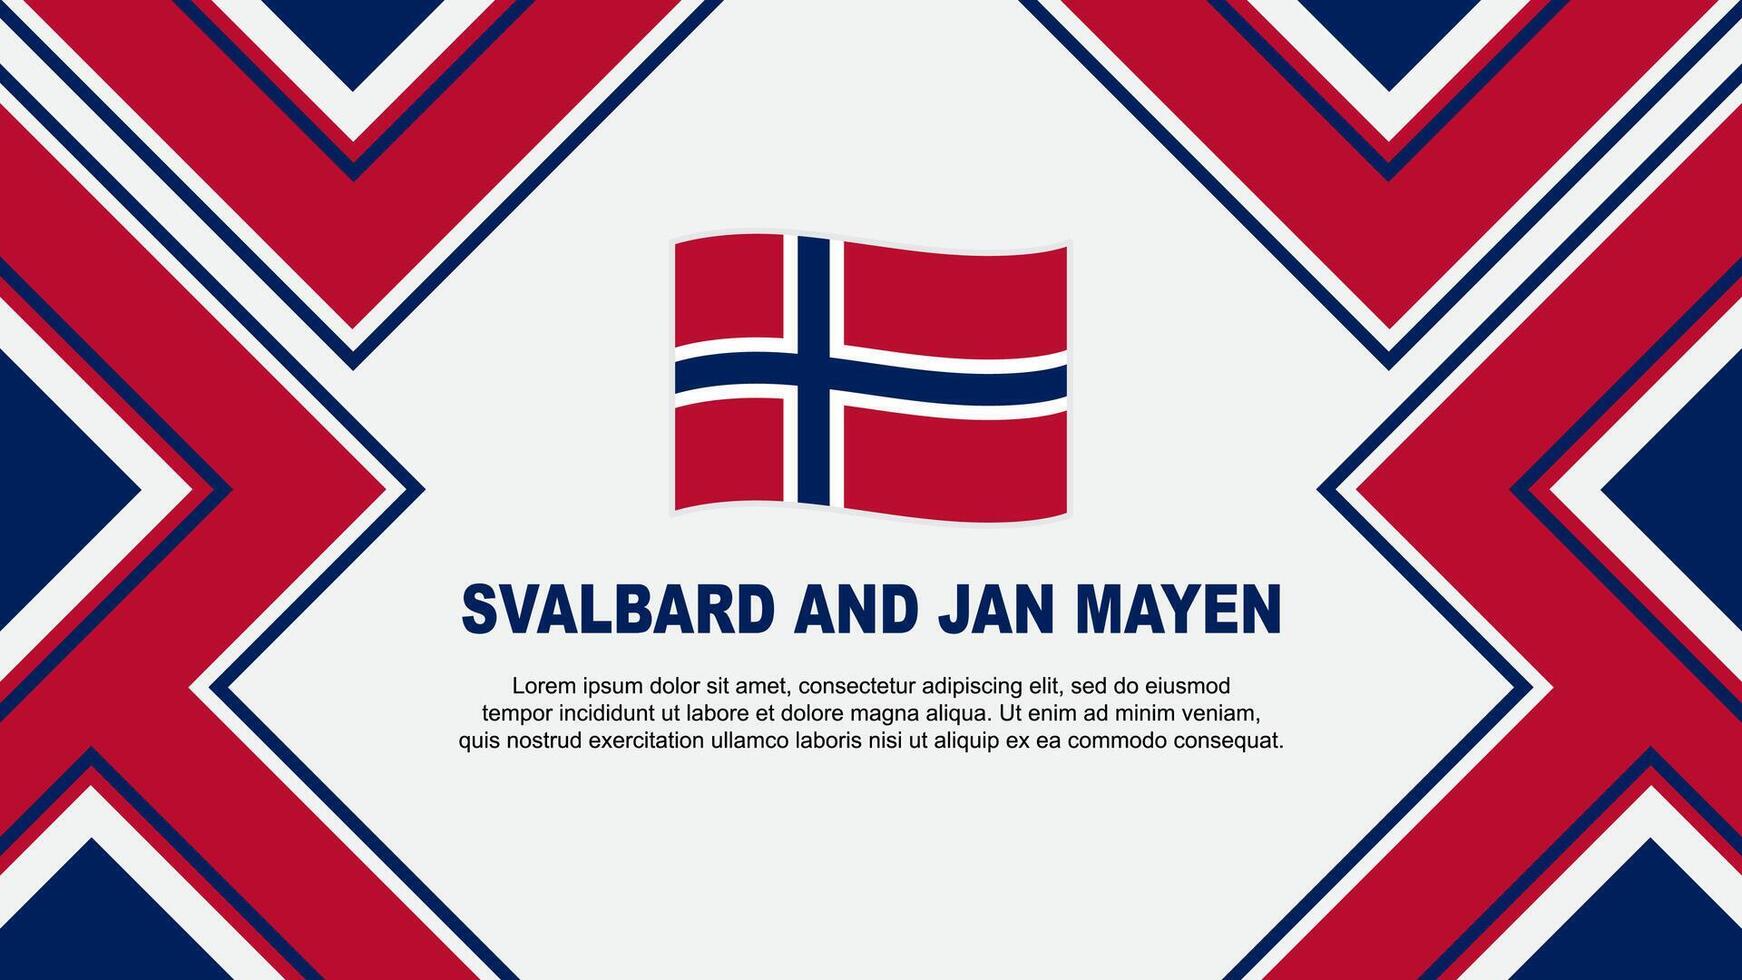 Spitsbergen en jan mayen vlag abstract achtergrond ontwerp sjabloon. Spitsbergen en jan mayen onafhankelijkheid dag banier behang vector illustratie. vector